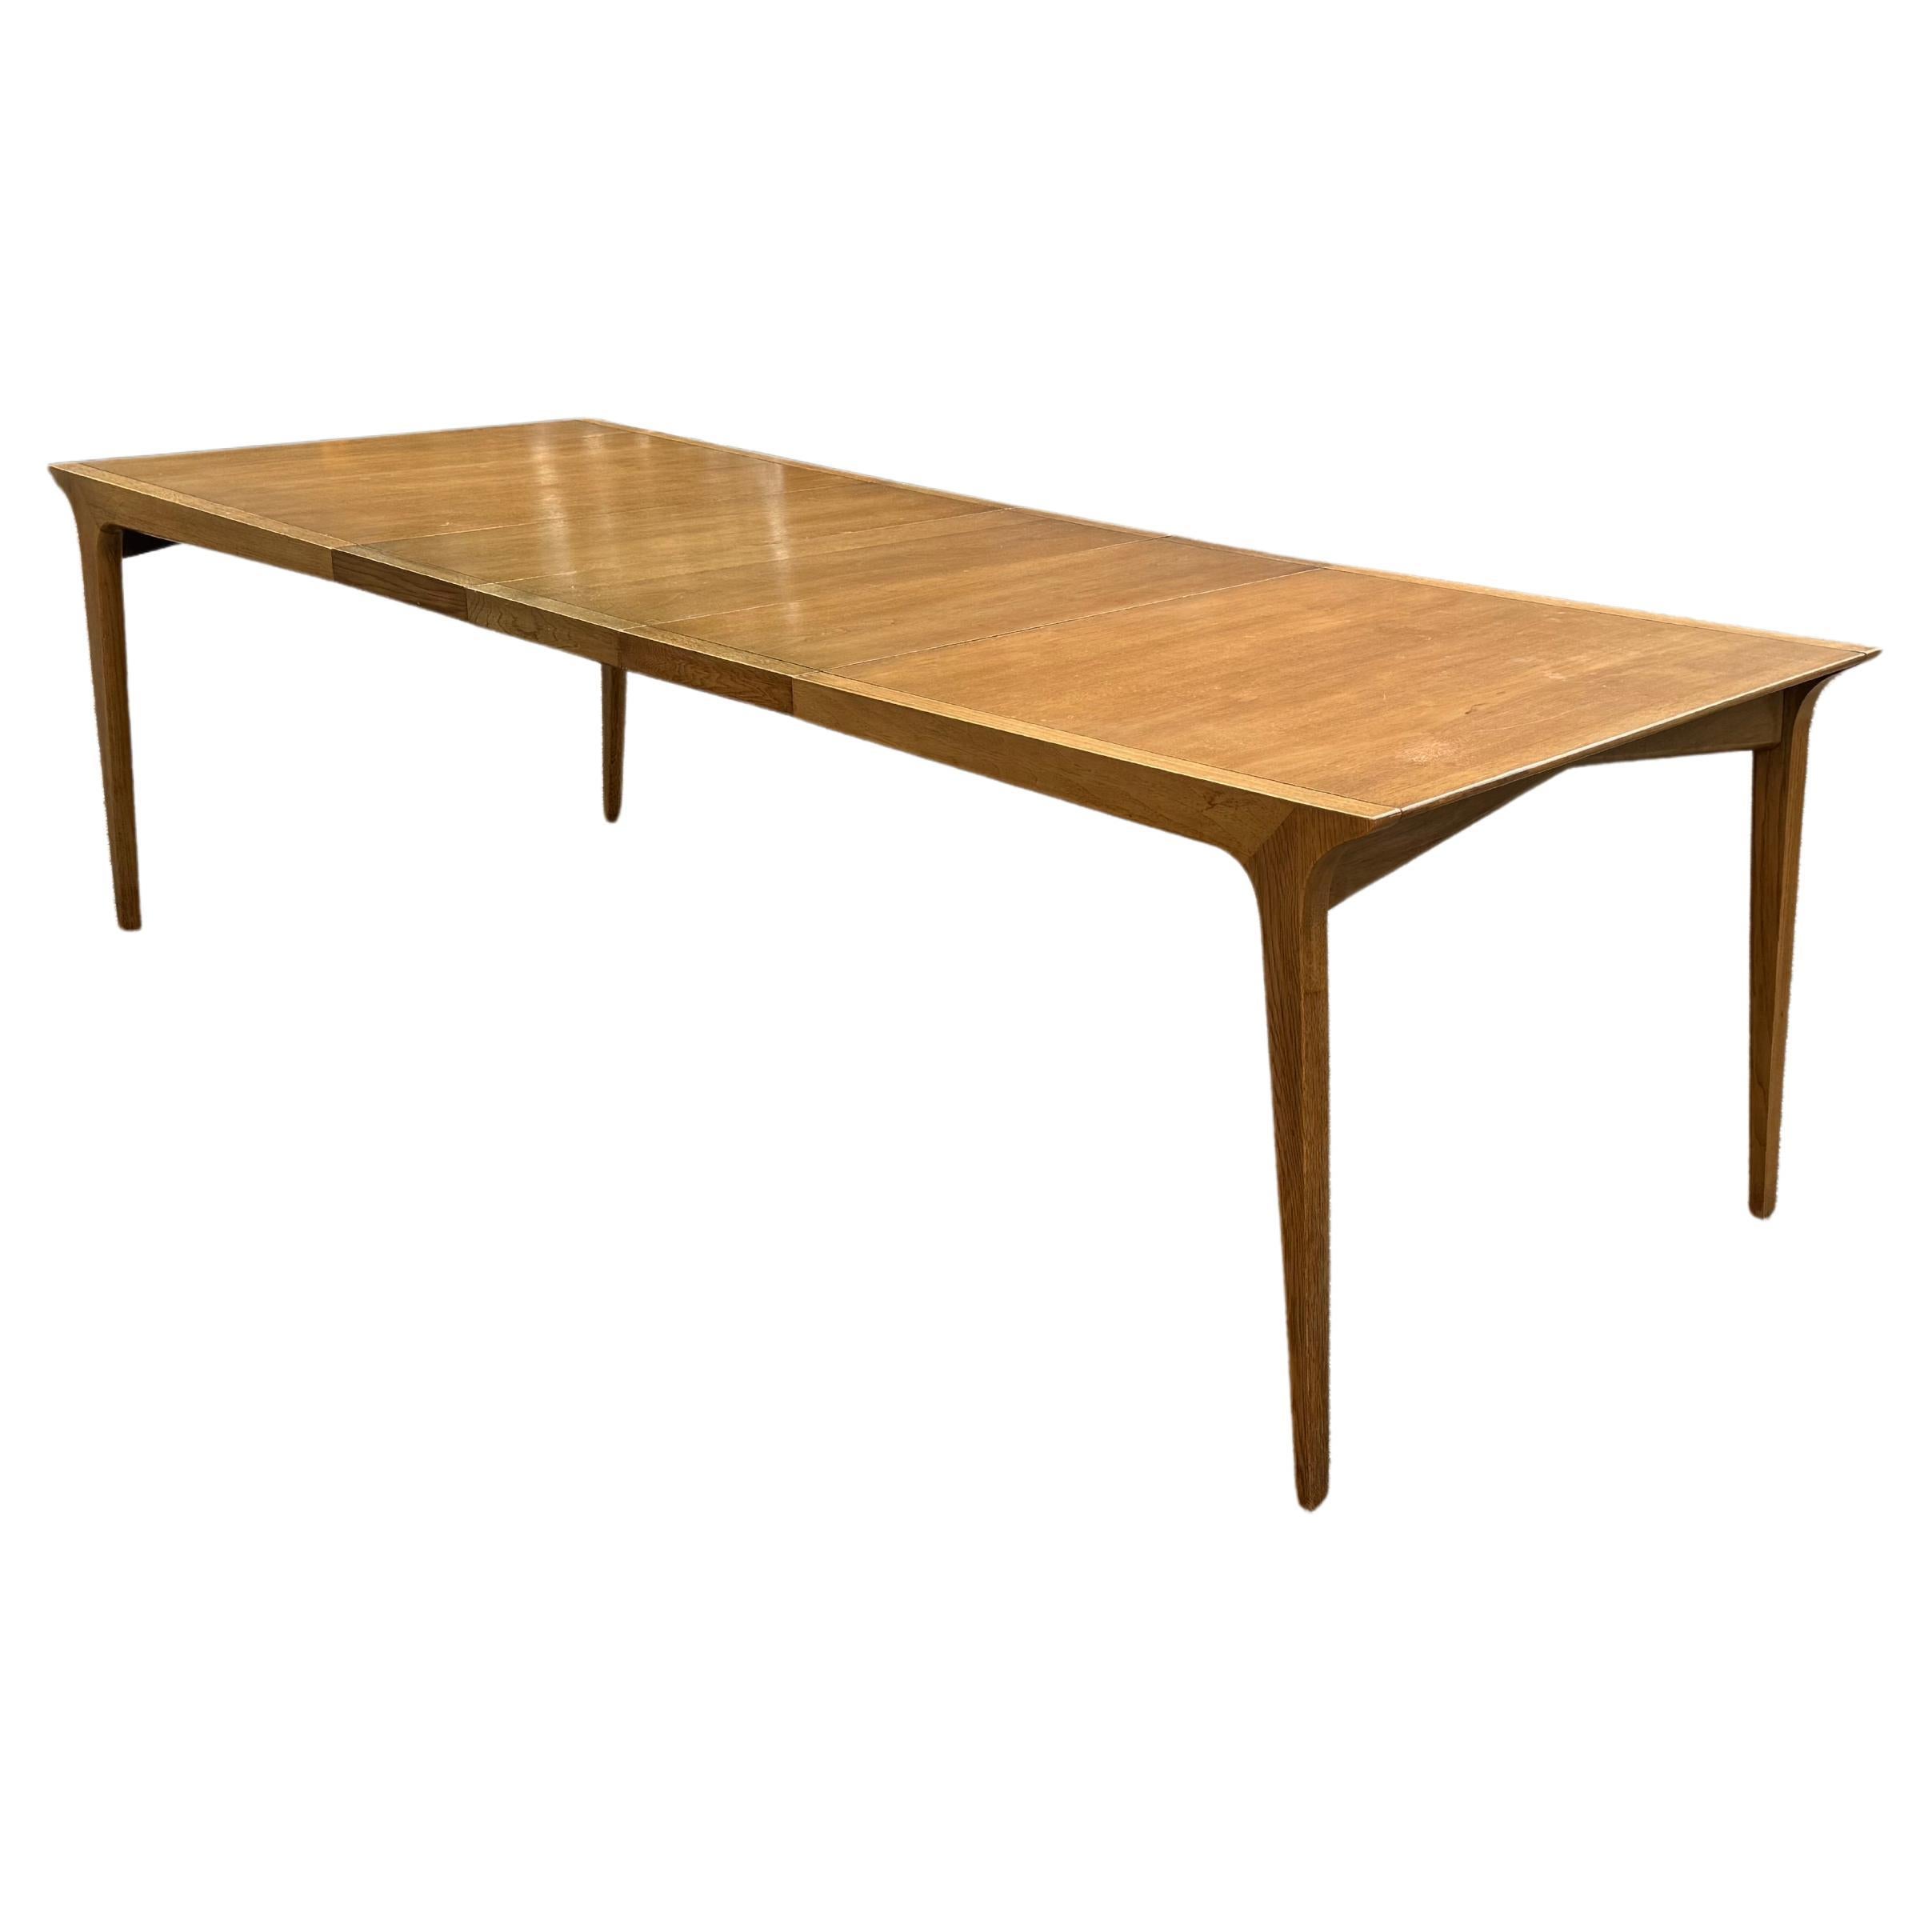 Mid-20th Century John Van Koert for Drexel - Profile -  Walnut Extension Dining Table - 3 Leaves  For Sale